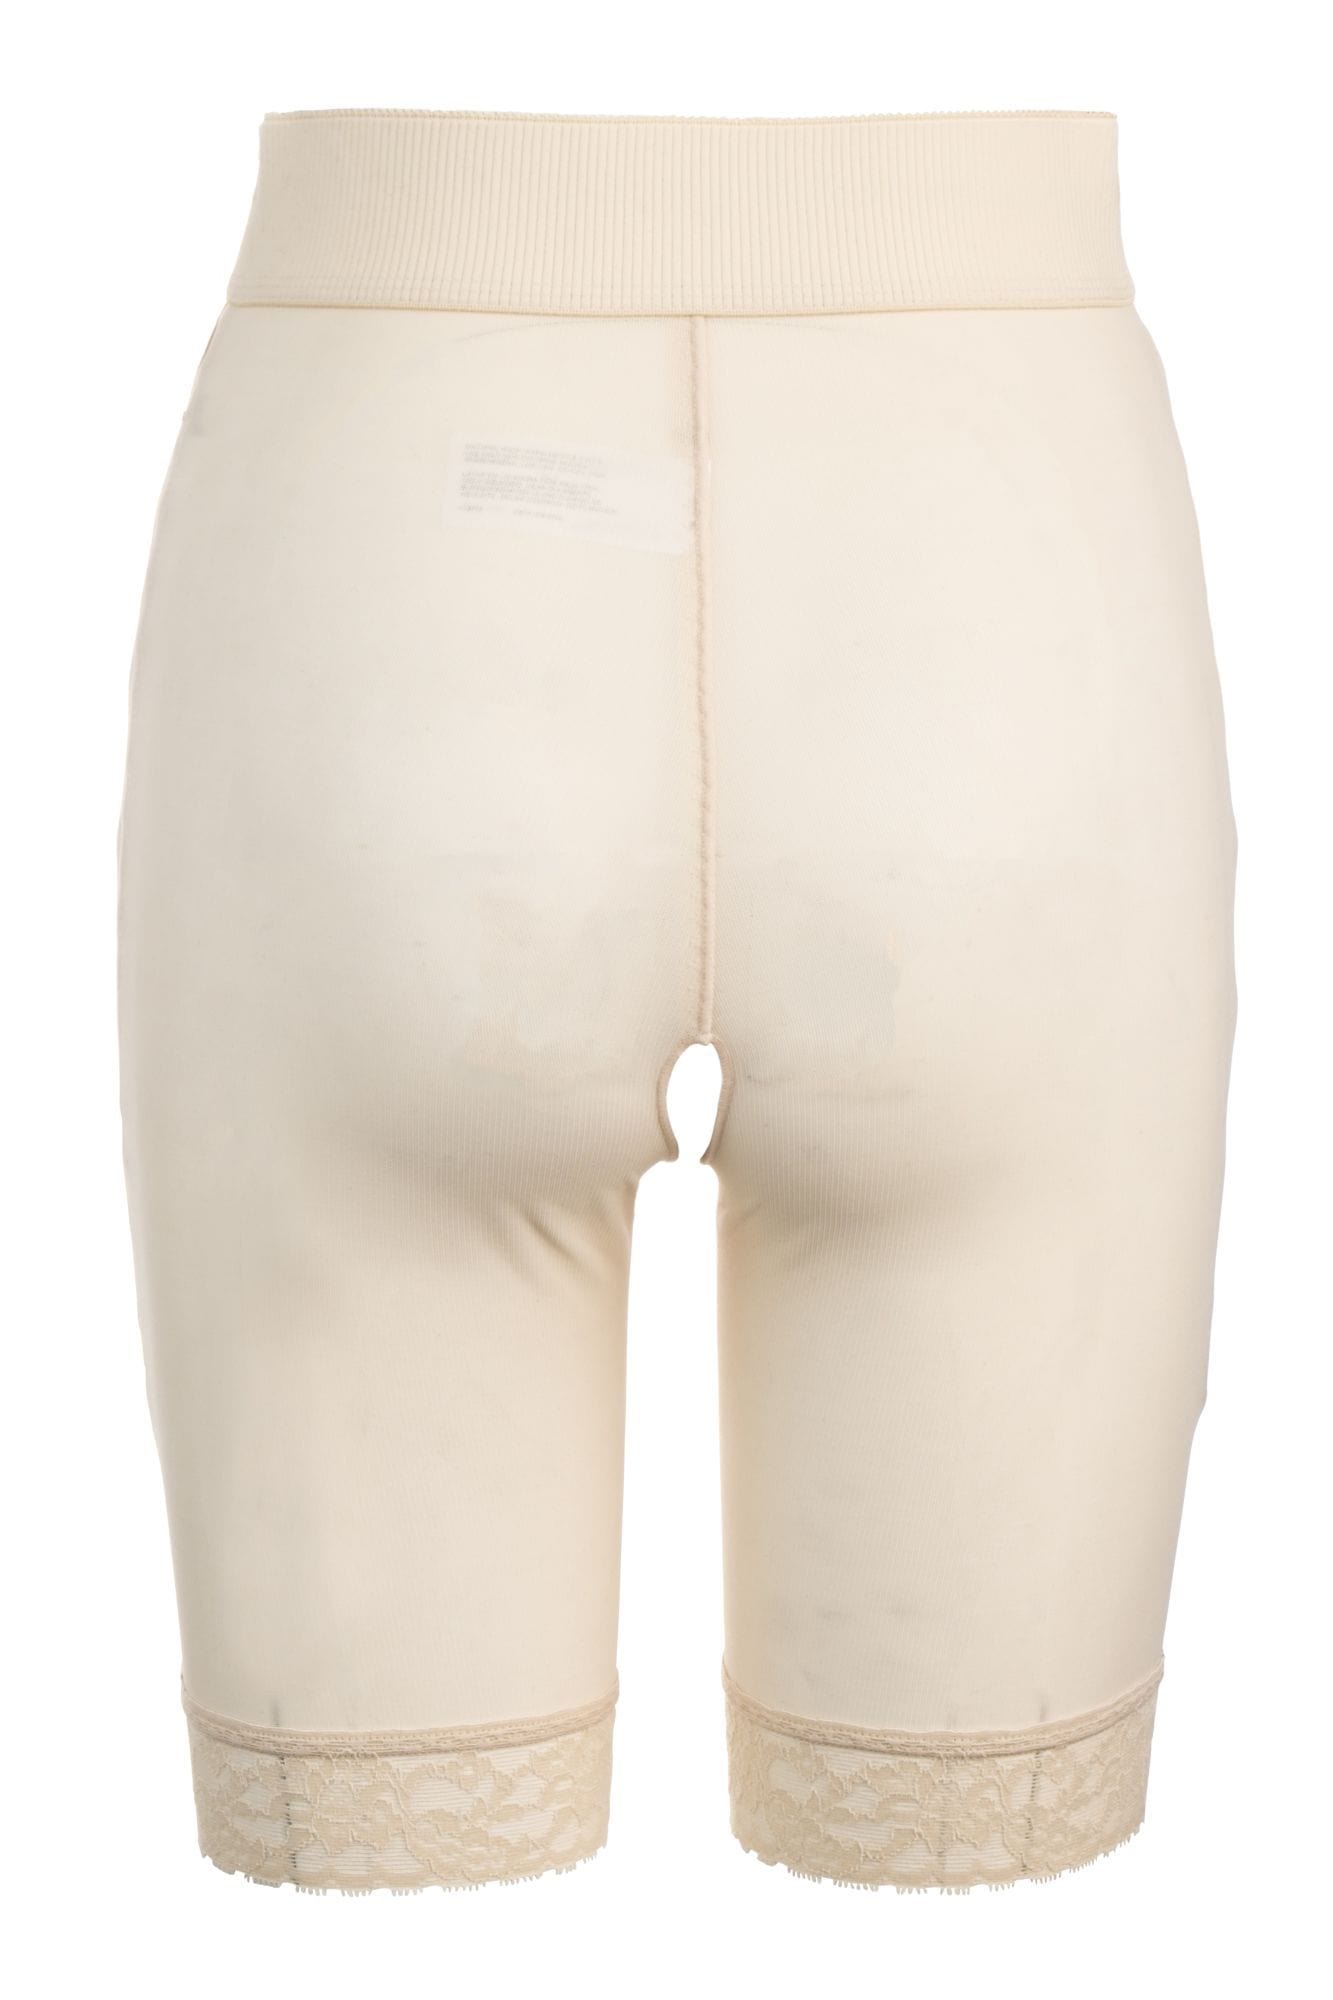 ReadyStock] High Waist Girdle Long Pants, Tummy Flatten Shapewear